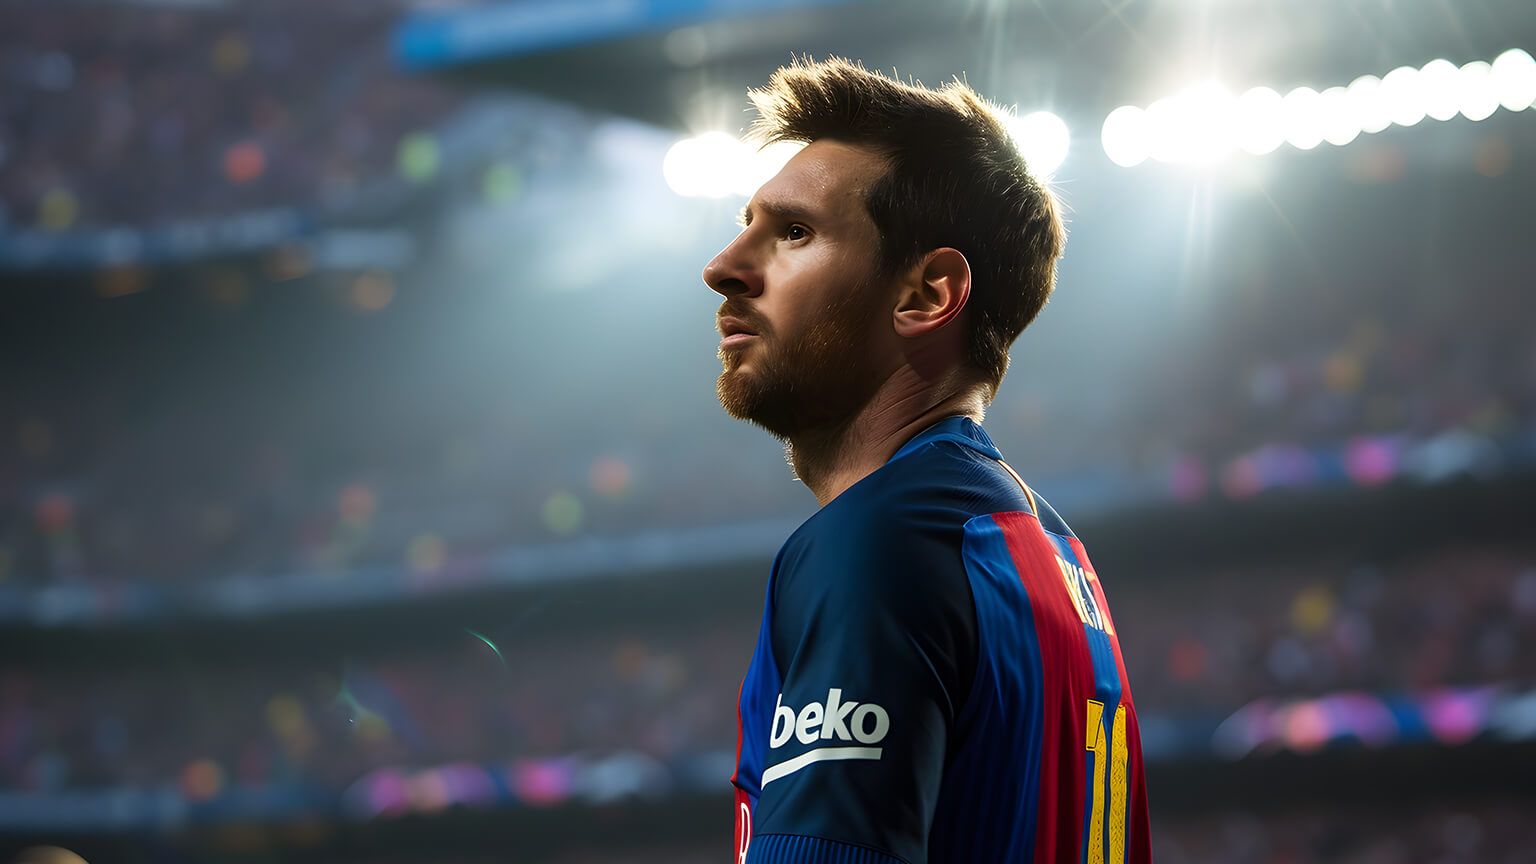  Barça Hintergrundbild 1536x864. Aesthetic Lionel Messi in Barcelona Kit Desktop Wallpaper in 4K